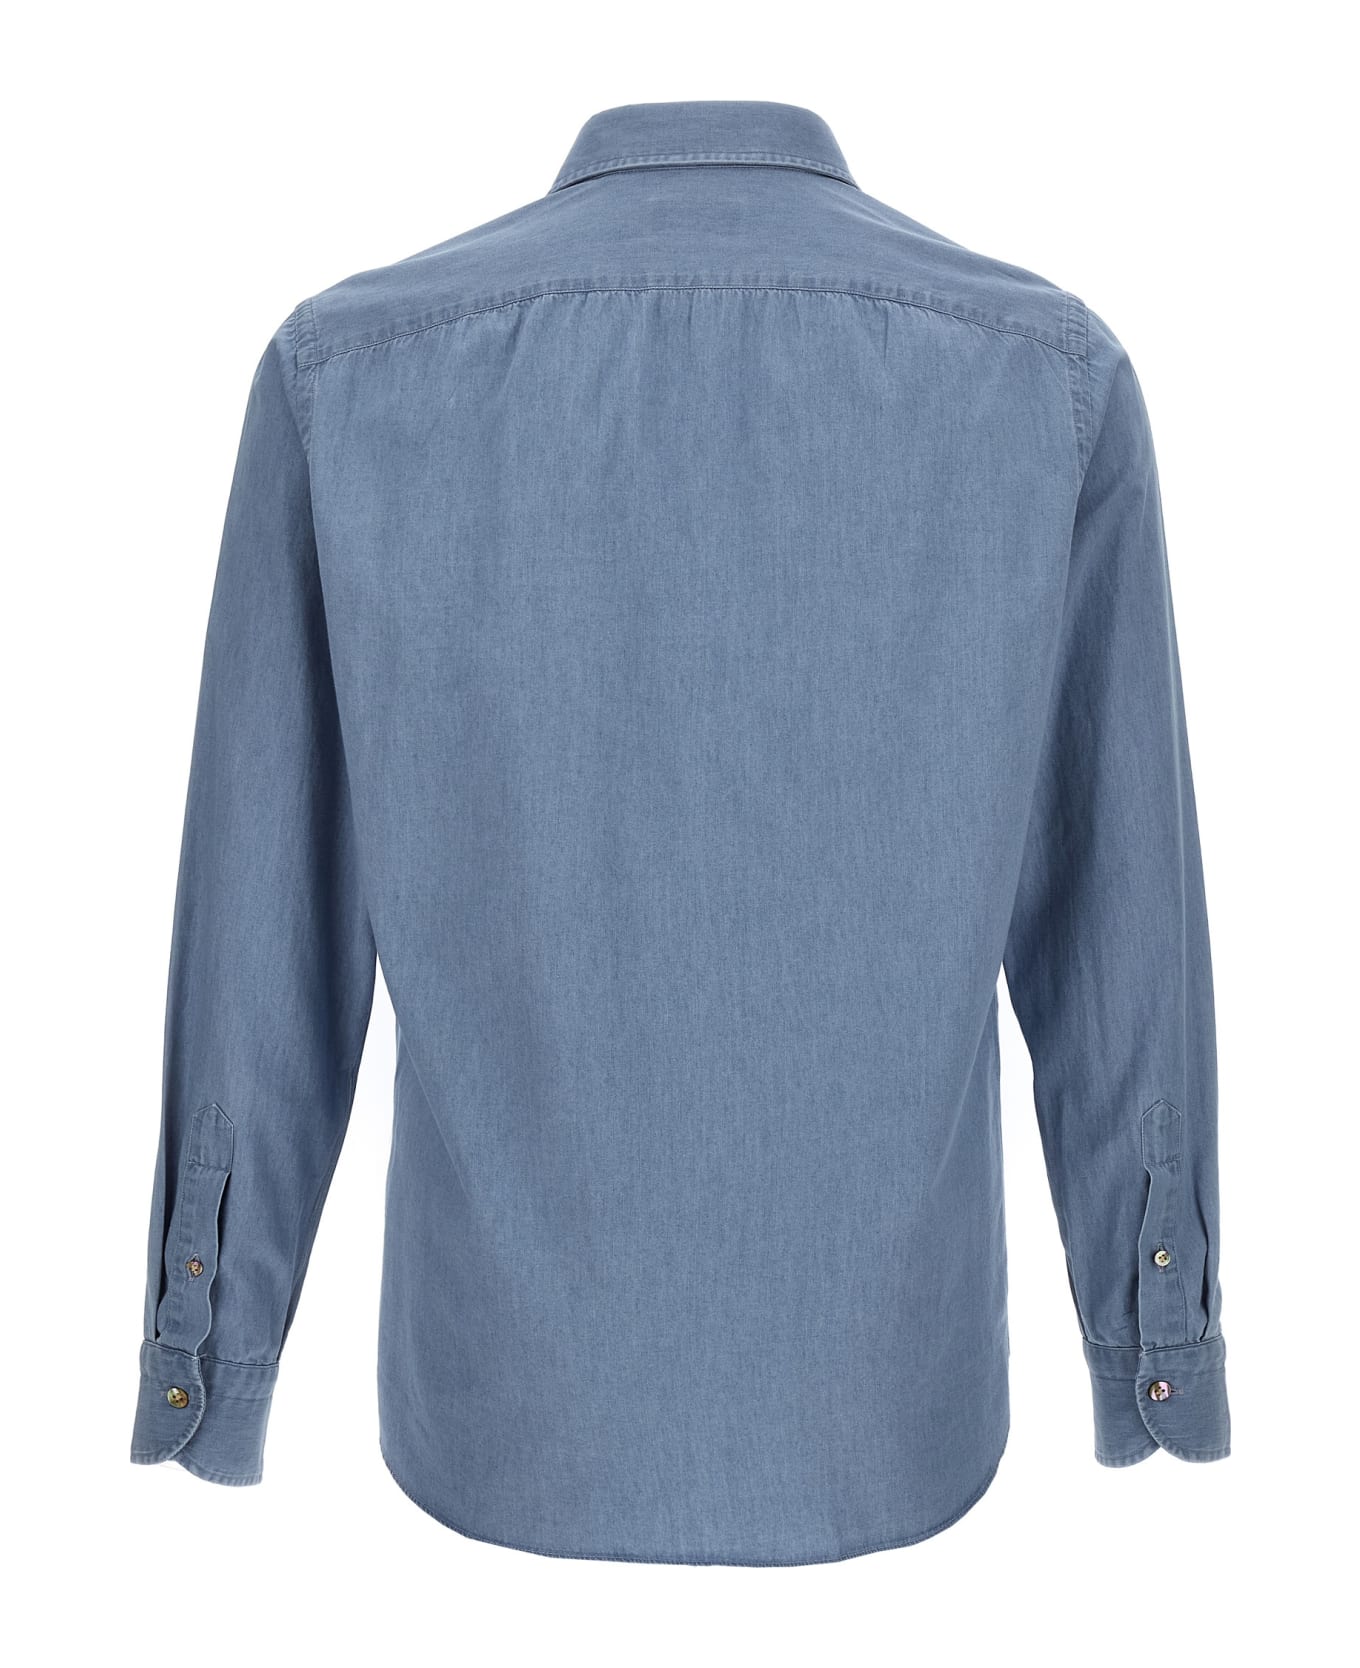 Borriello Napoli Chambray Shirt - Light Blue シャツ